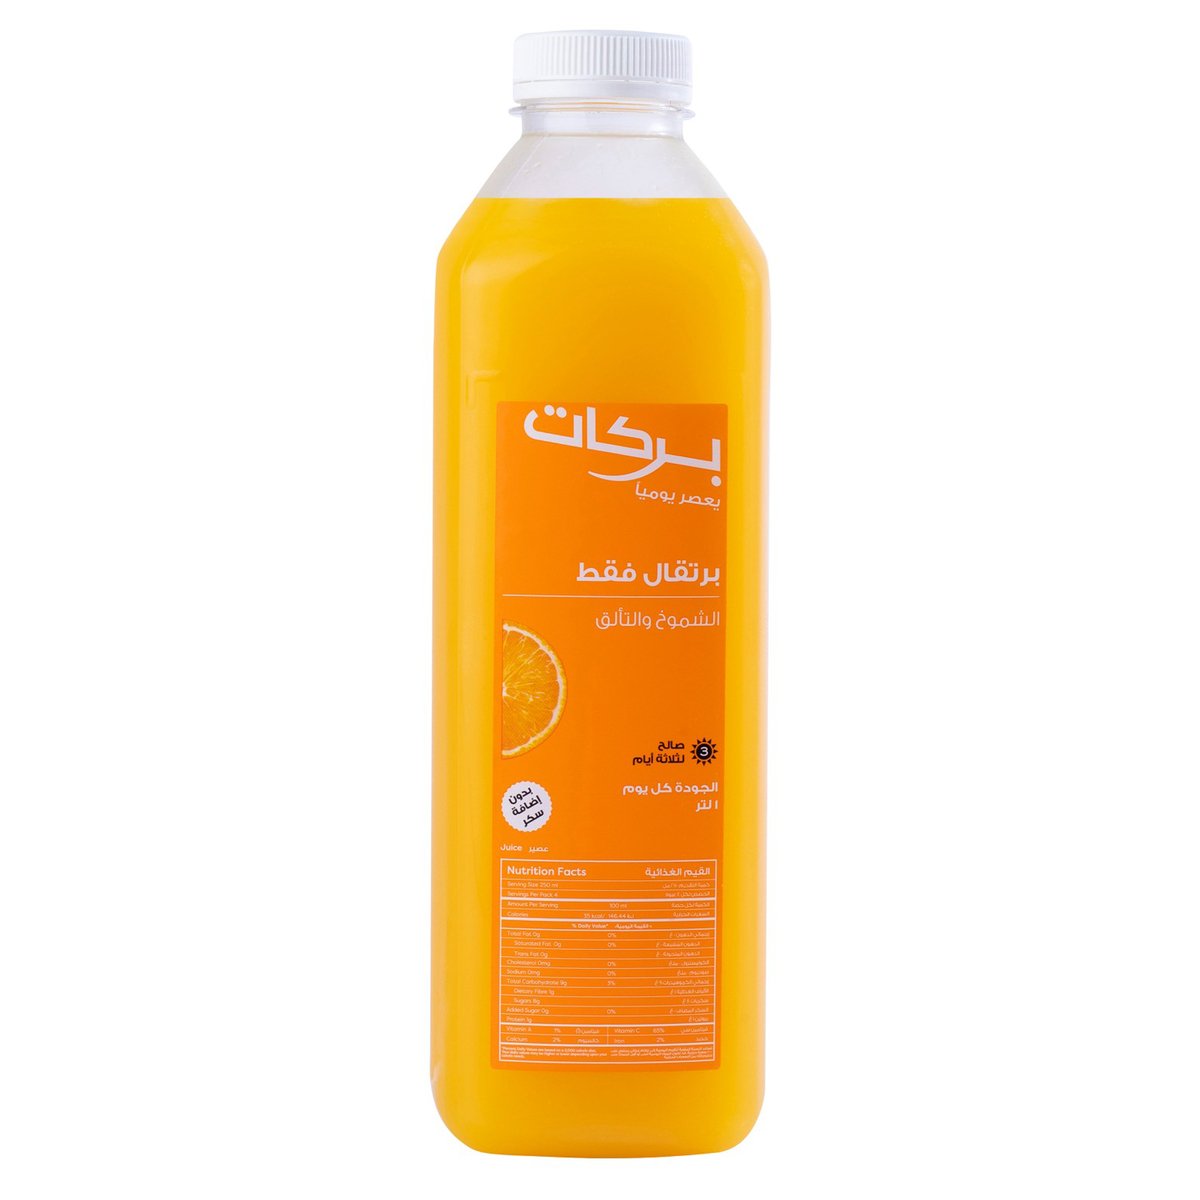 Barakat Fresh Juice Just Orange 1 Litre